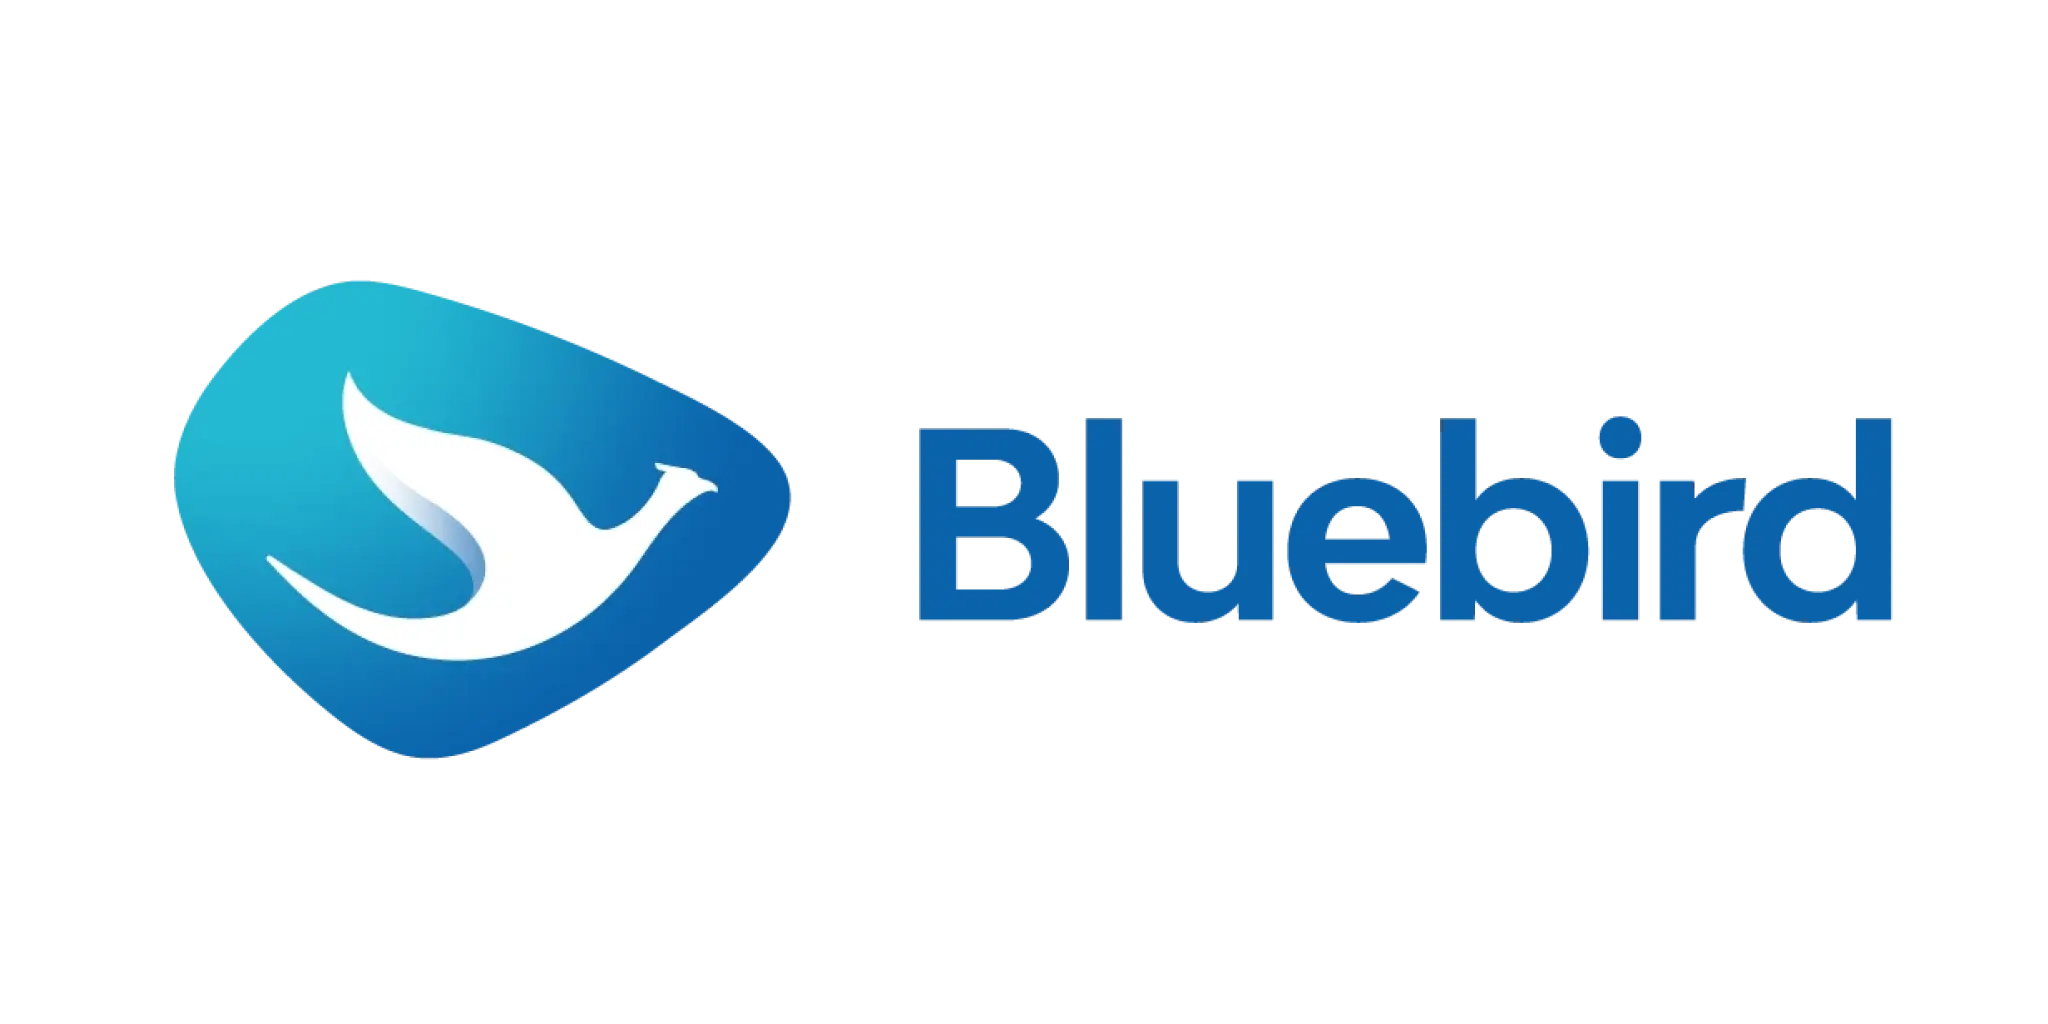 Blue Bird Logo